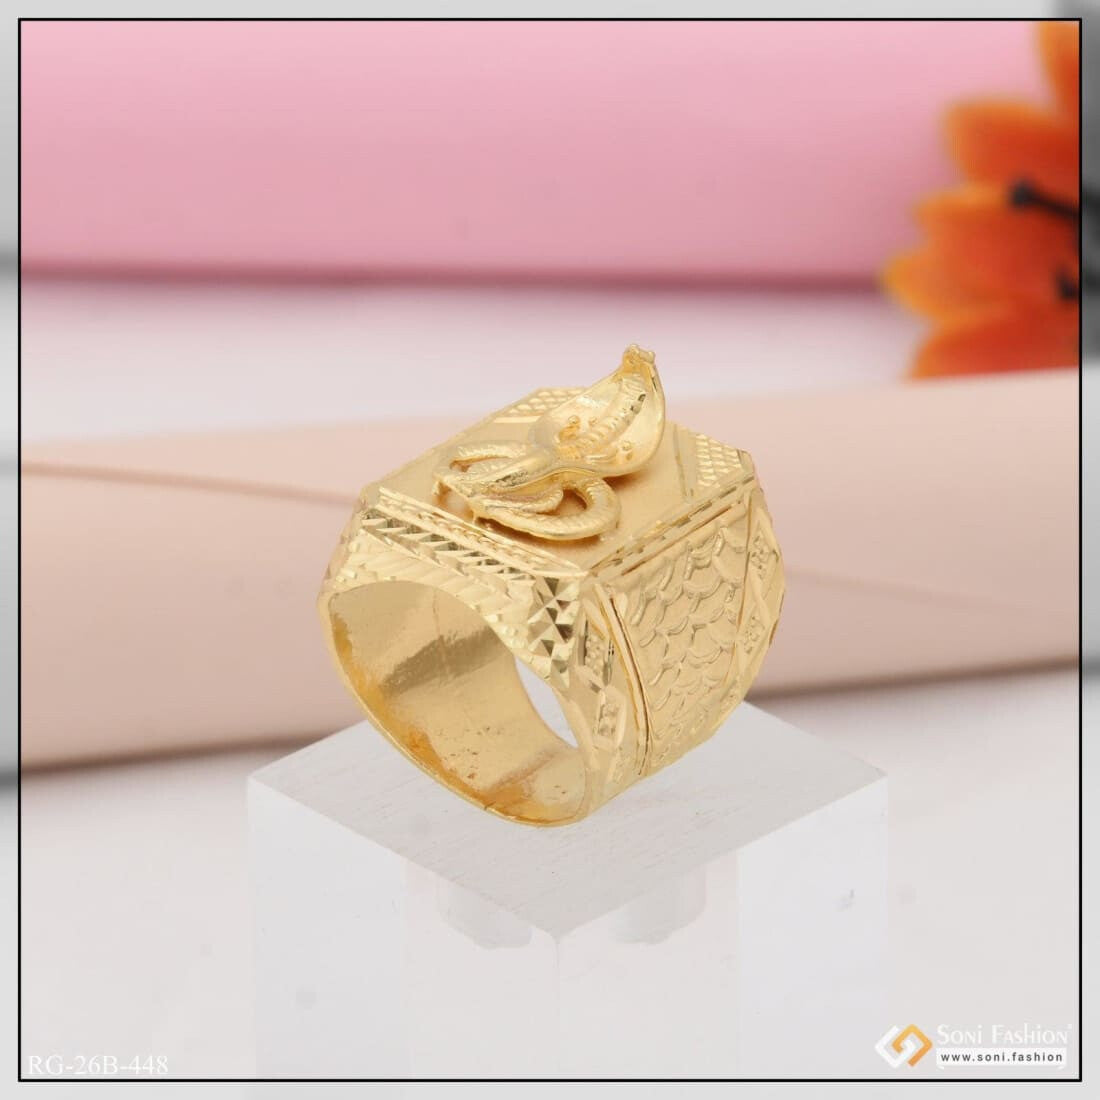 Gold Ring Design For Female Images For Your Bridal Bling